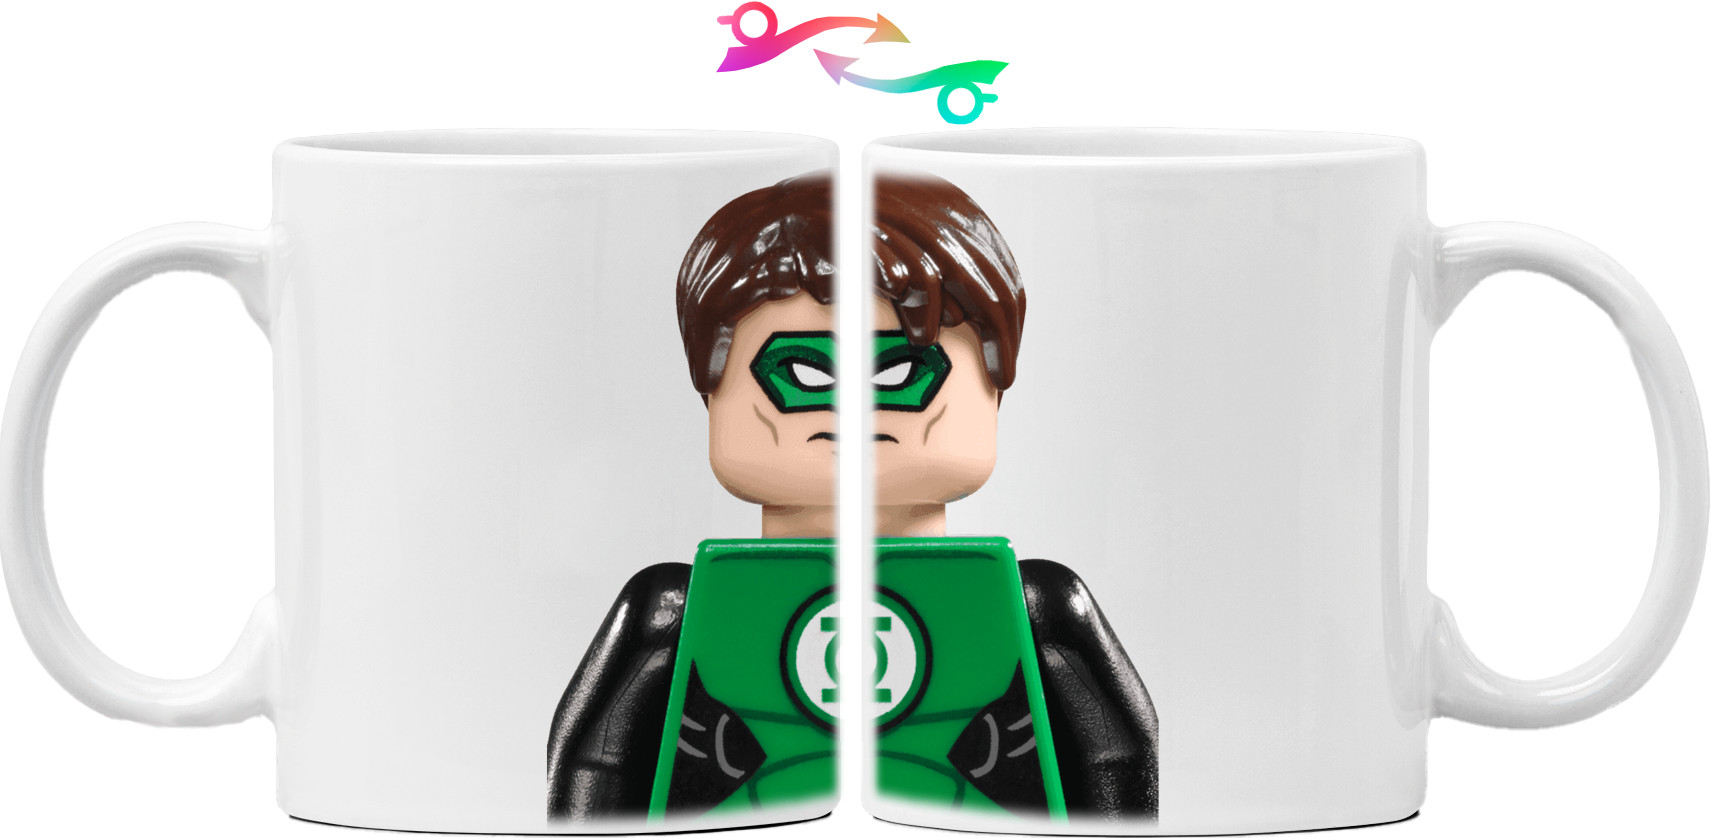 Lego superheroes 1